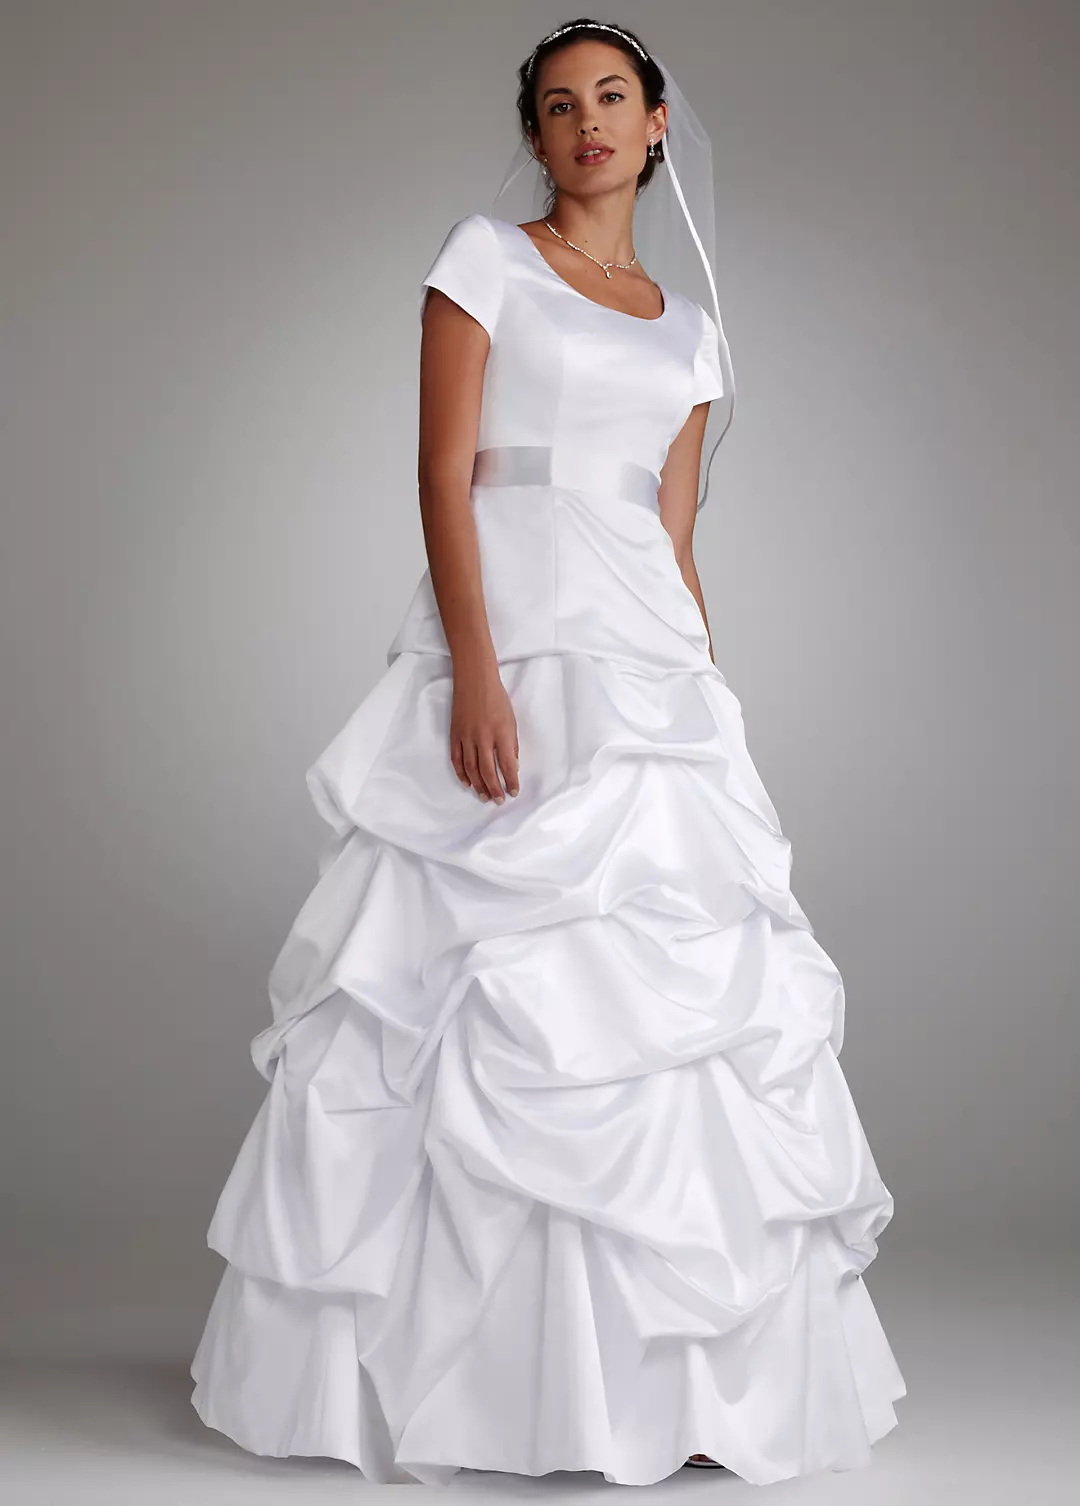 Short Sleeve Wedding Dress with Pick Up Skirt Image